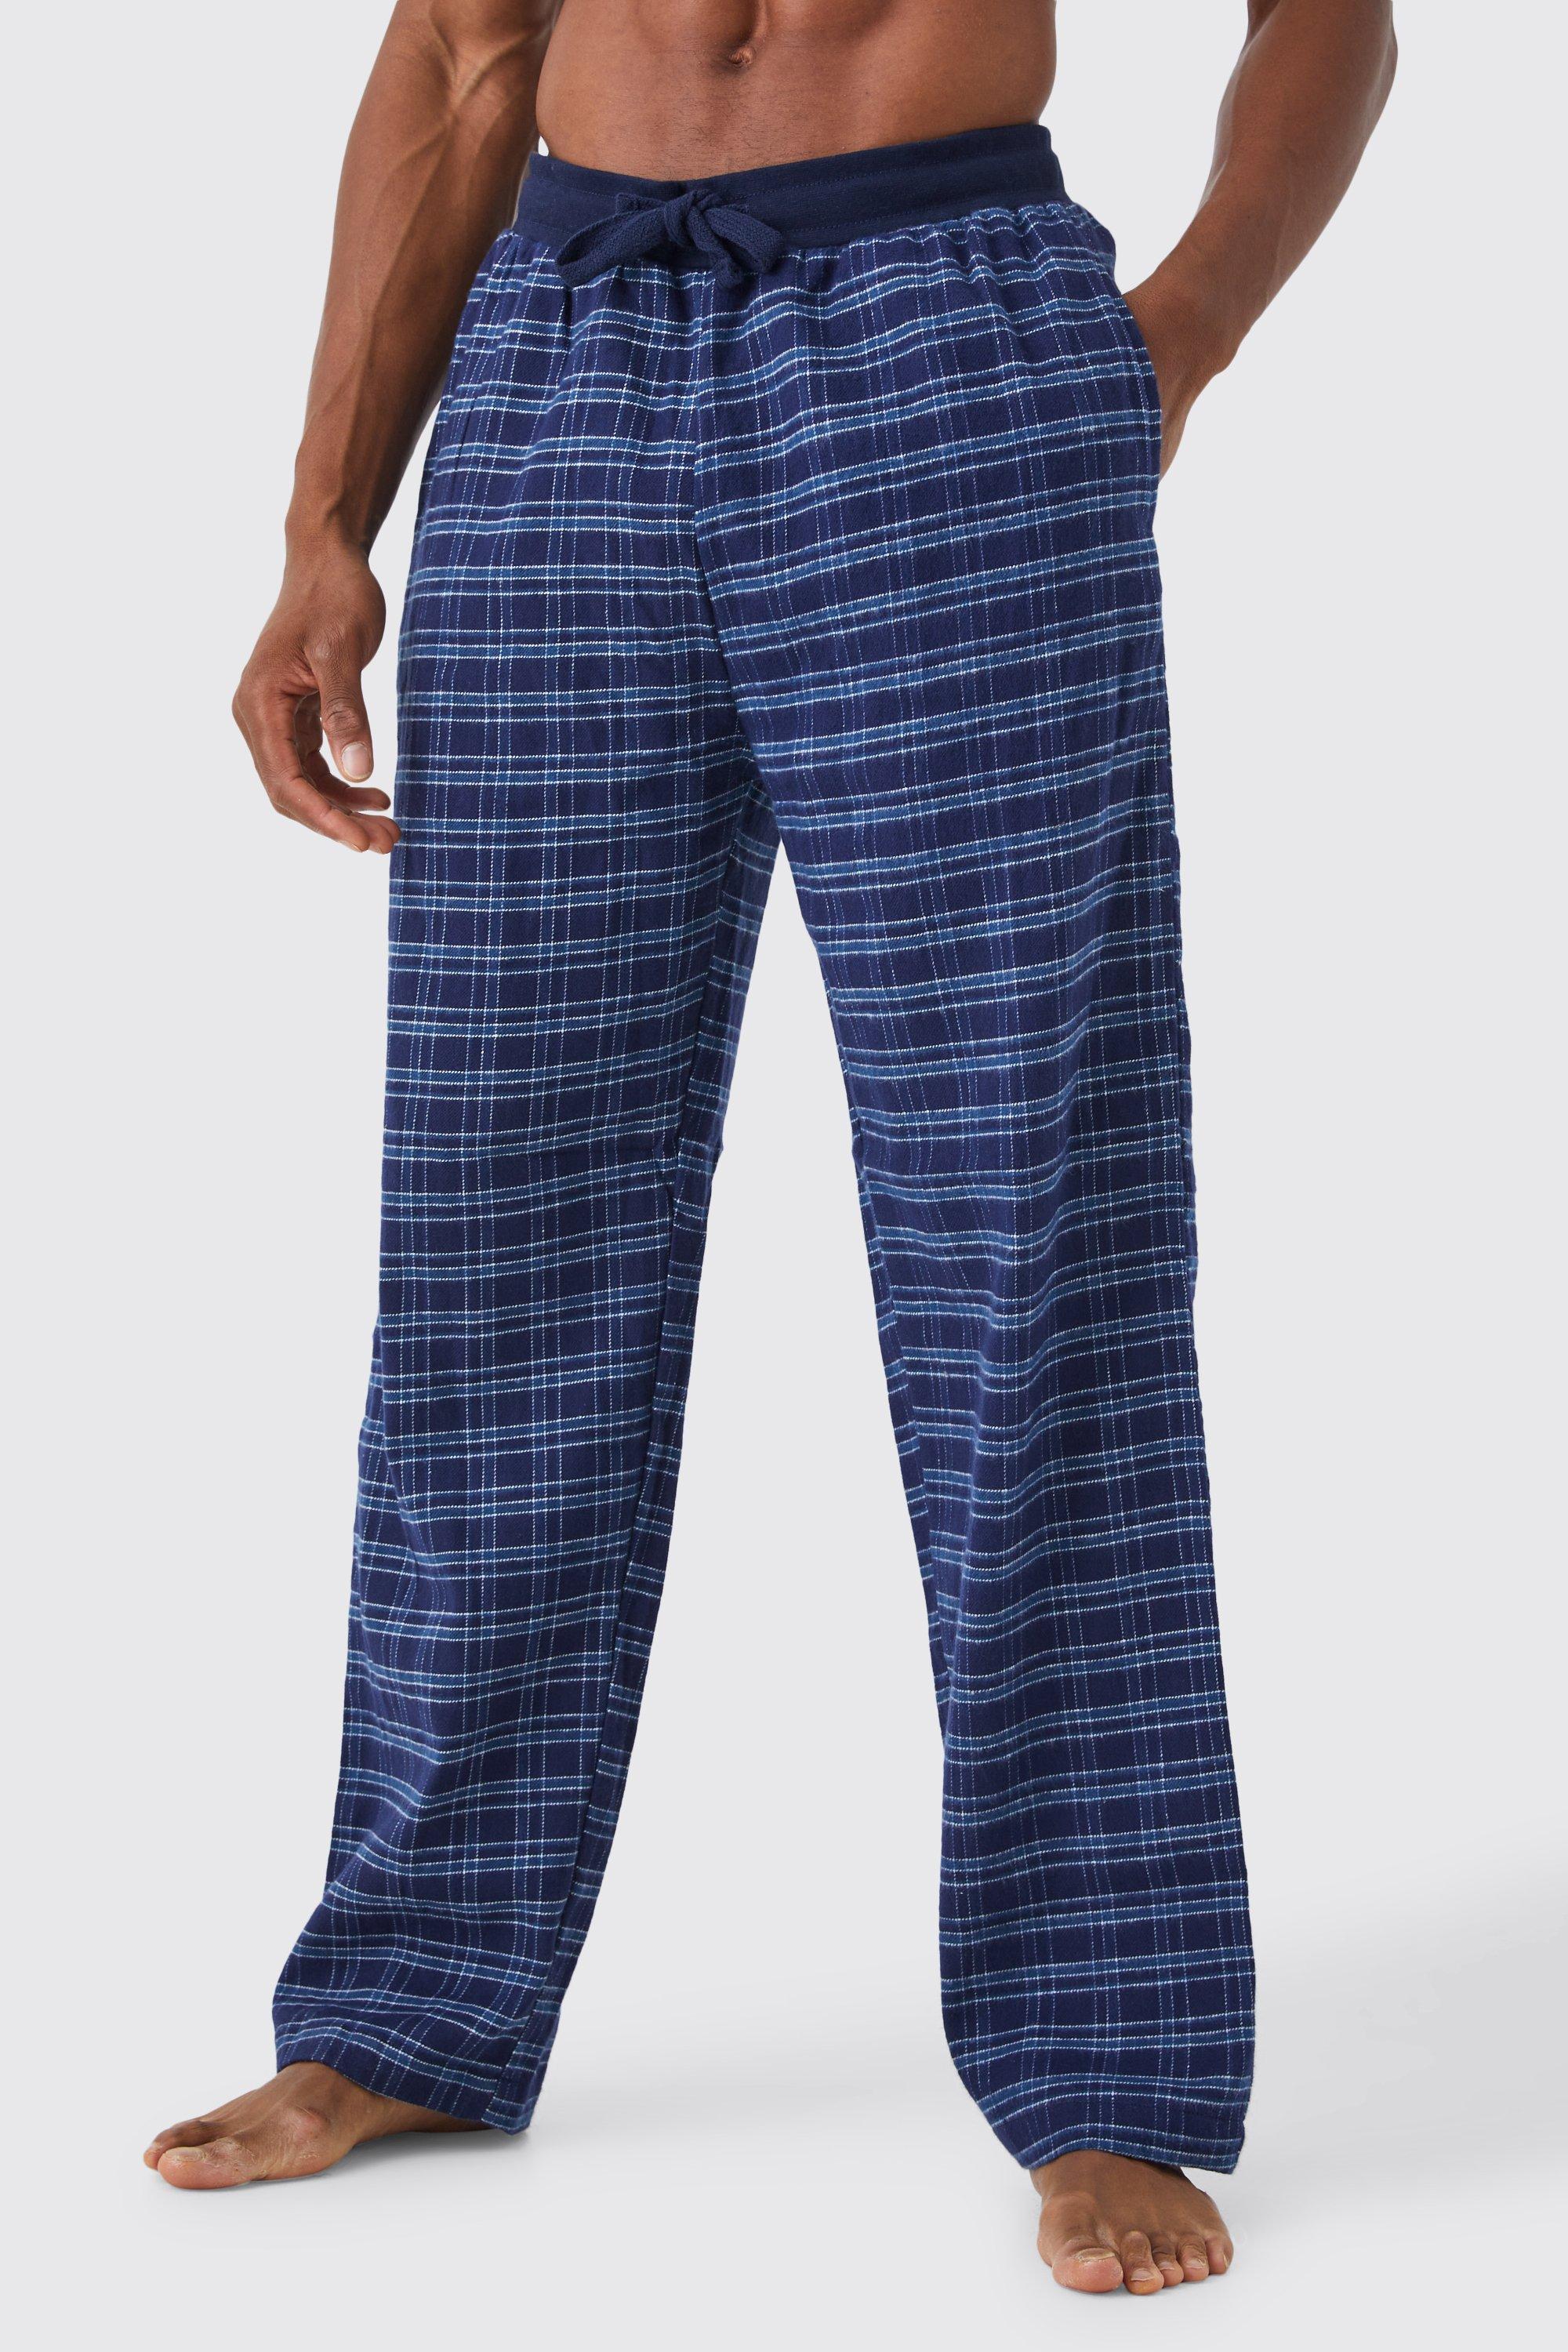 pantalon de pyjama à carreaux homme - bleu - xs, bleu